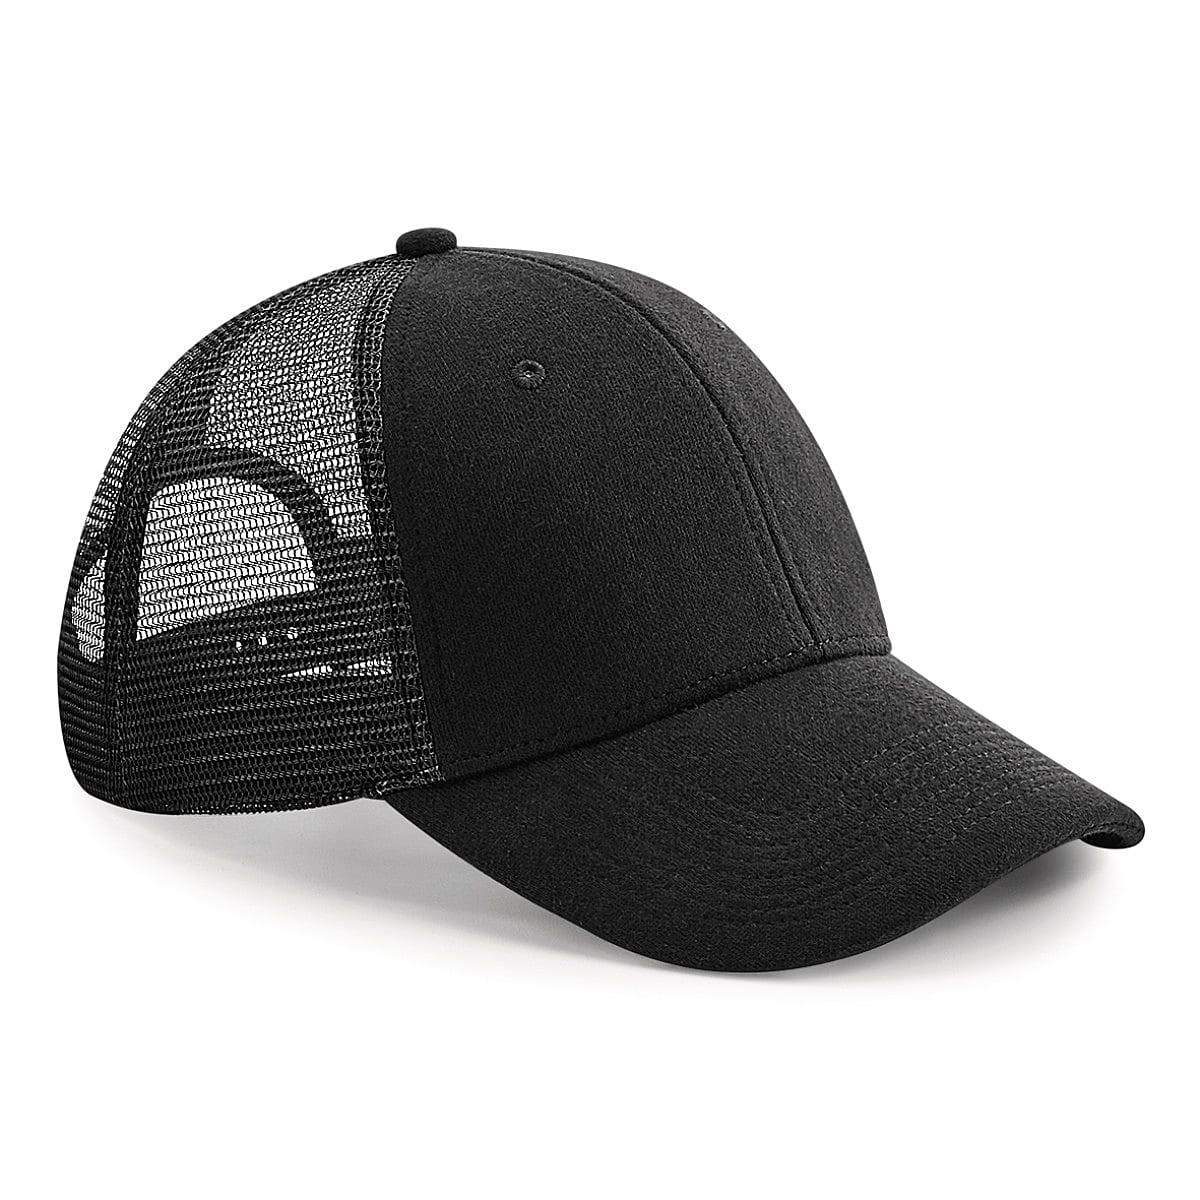 Beechfield Jersey Athleisure Trucker Cap in Black (Product Code: B678)